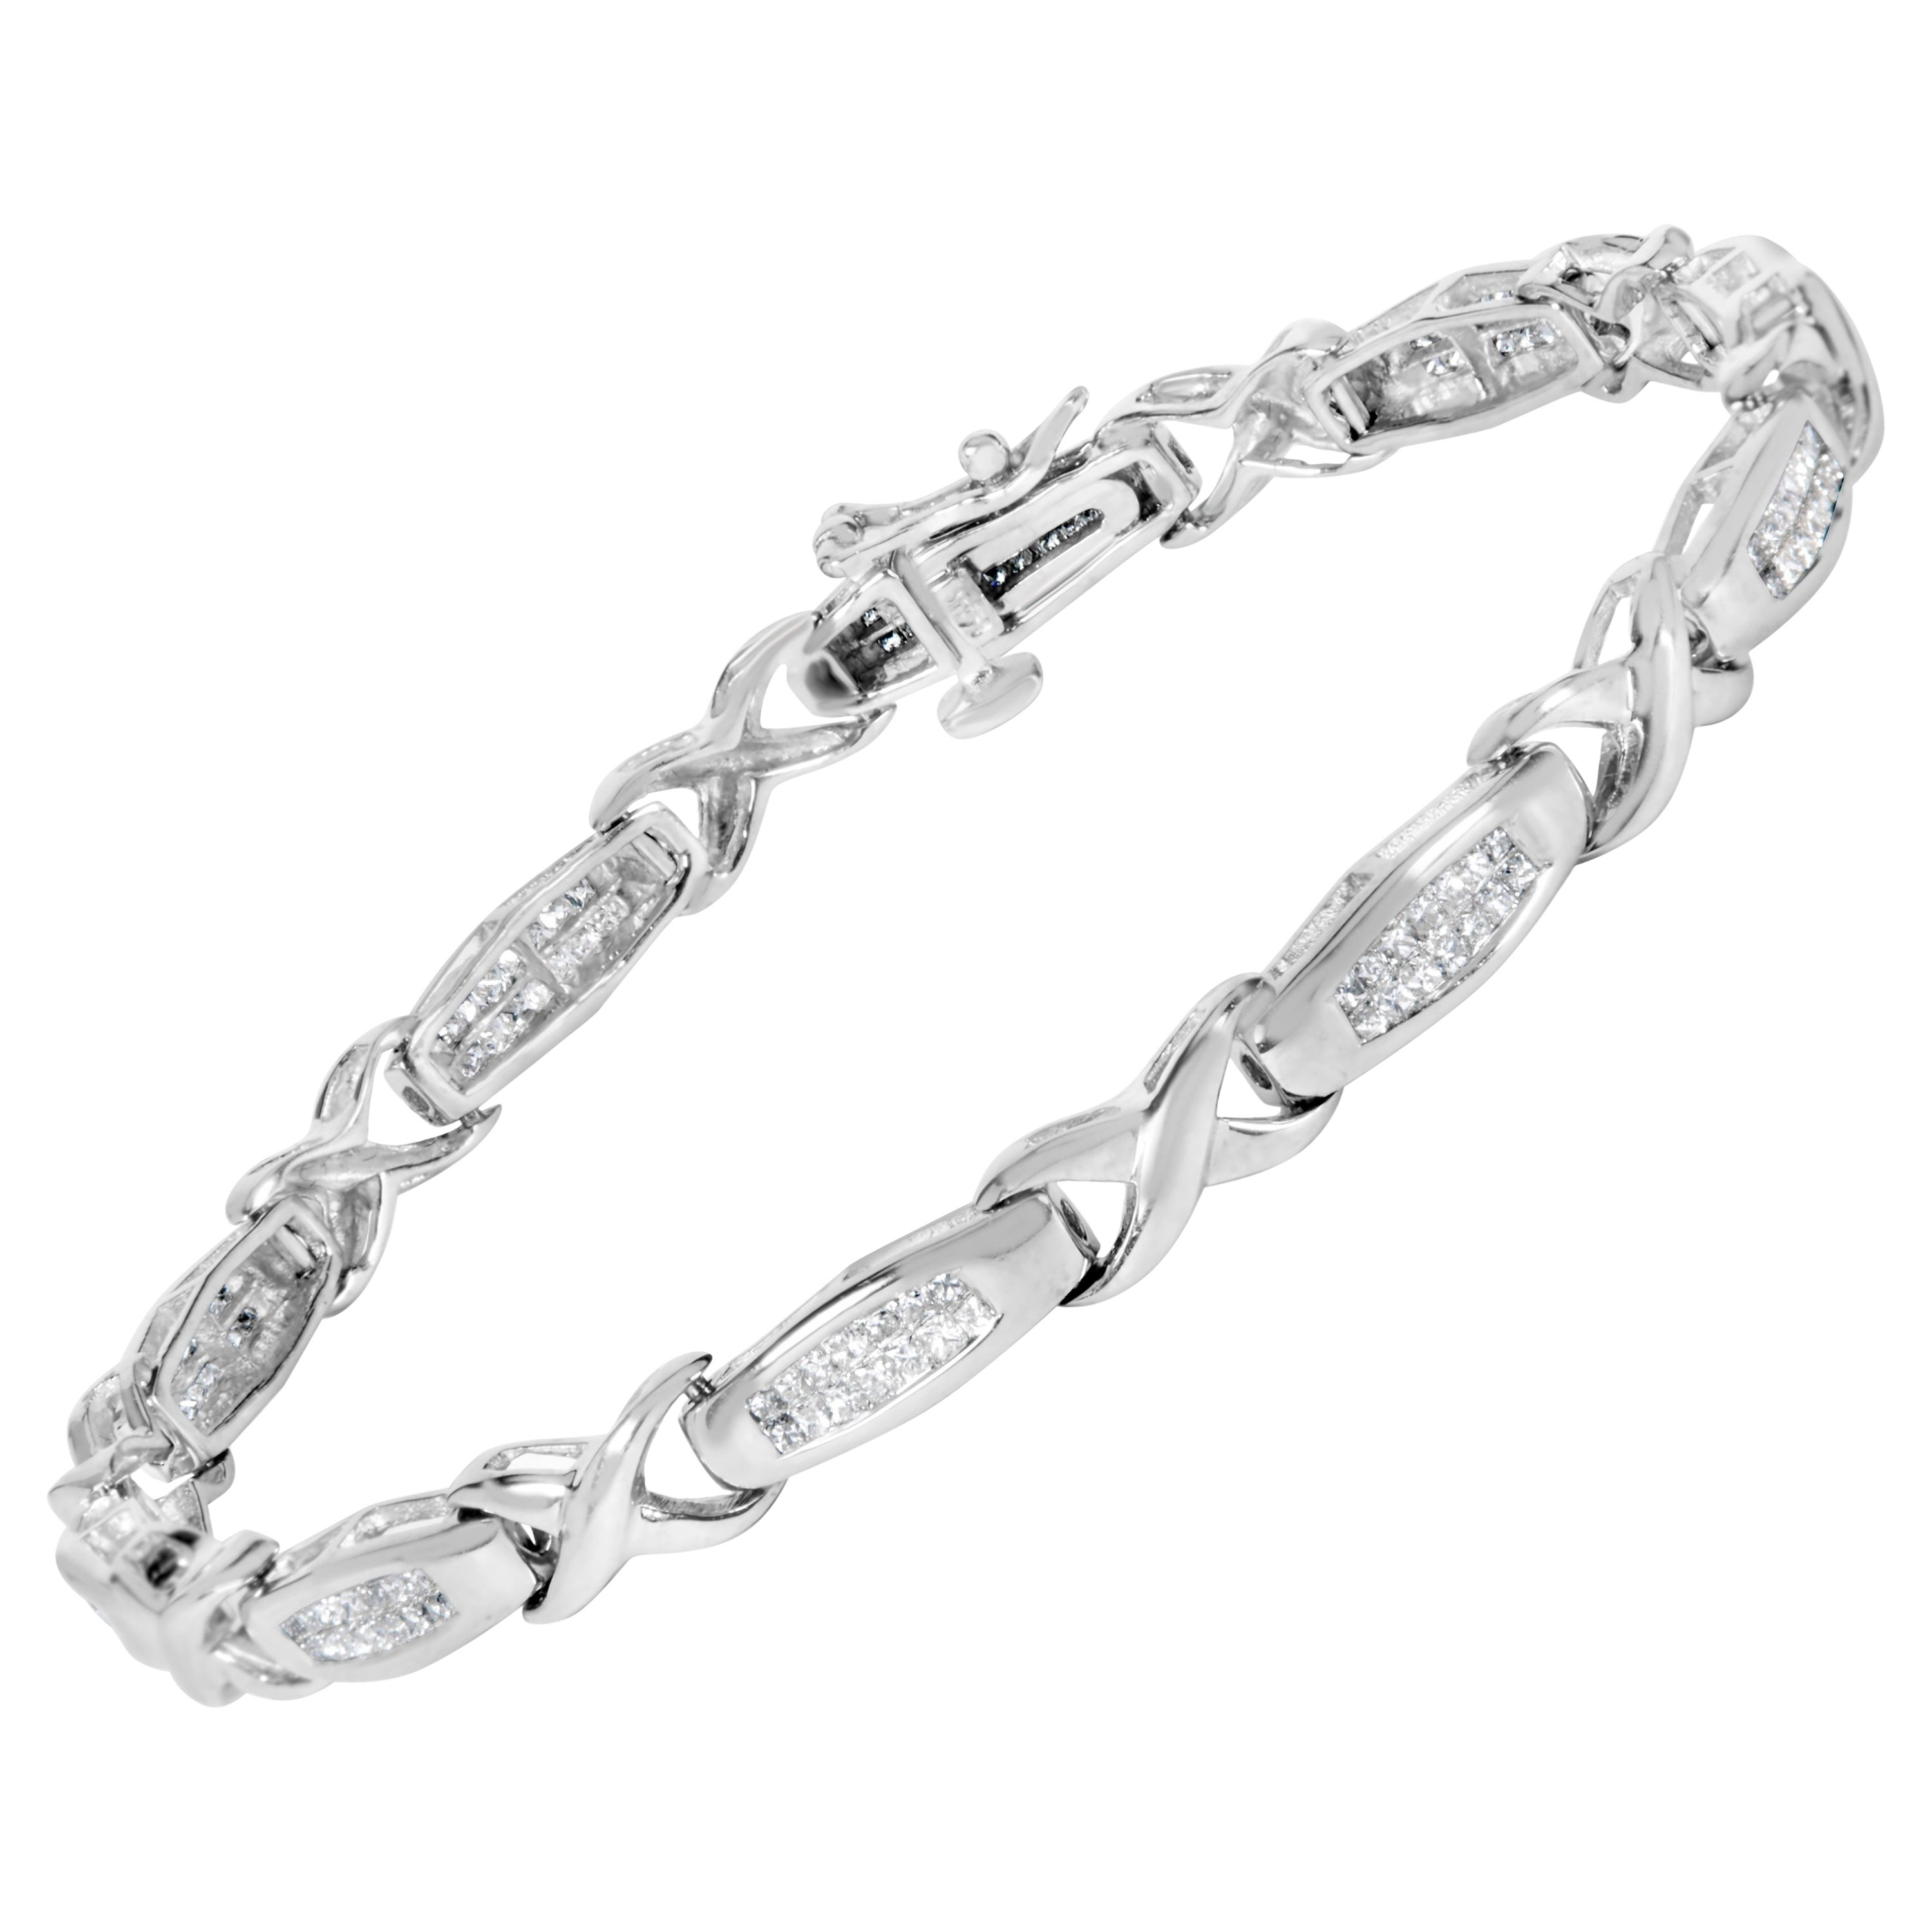 14K White Gold 1.0 Cttw Invisible-Set Princess Diamond Tennis Bracelet- 7"